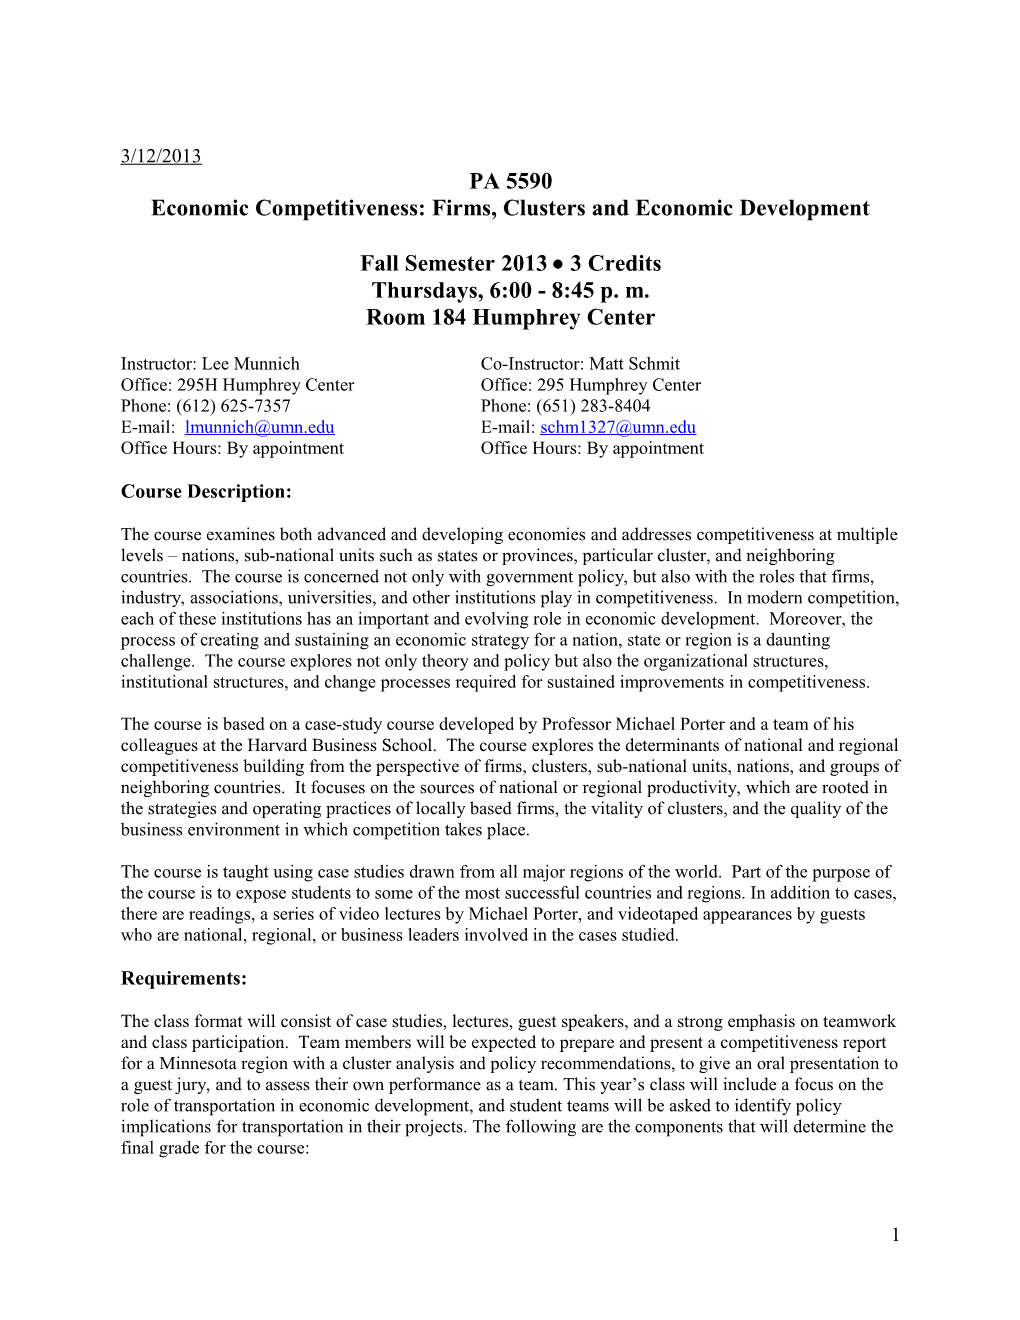 Economic Competitiveness: Firms, Clusters and Economic Development